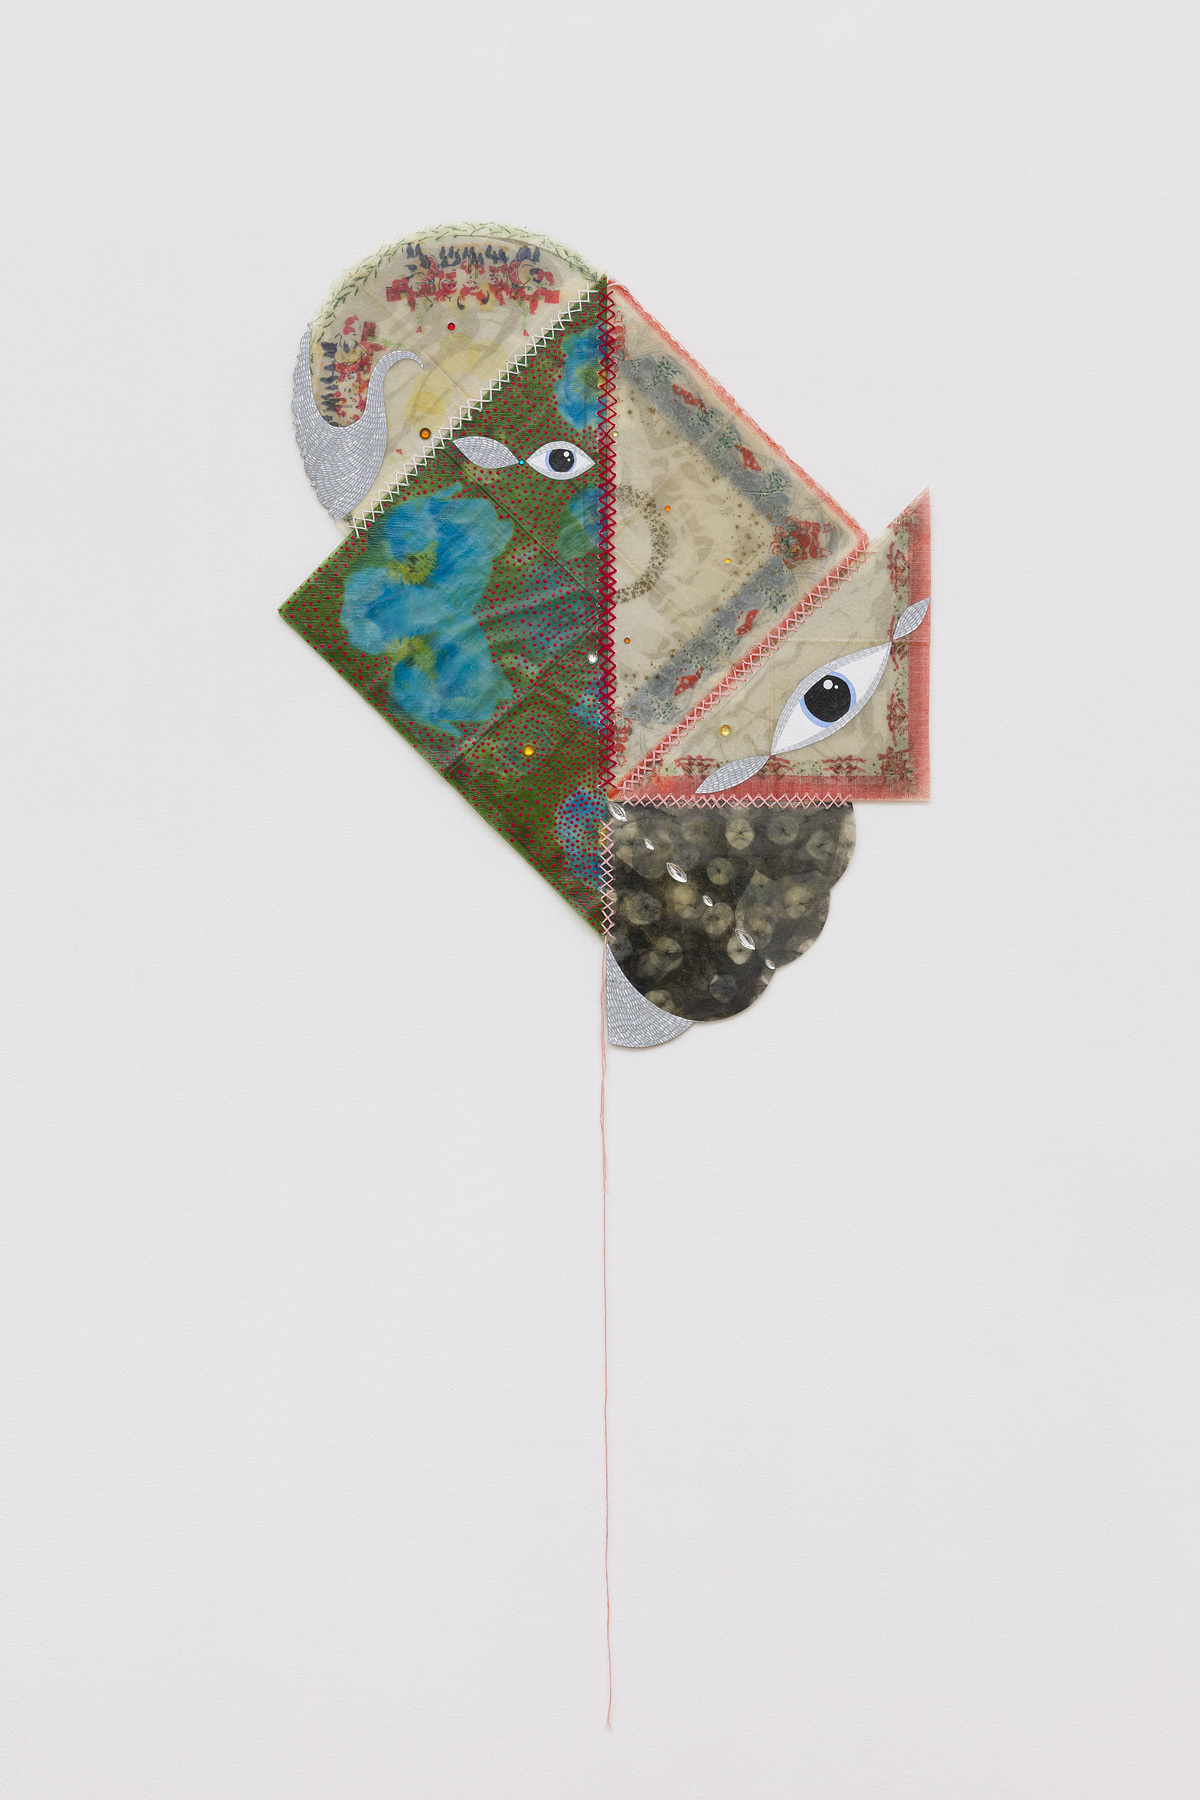 Sóley Ragnarsdóttir, Untitled, 2021, Napkins, acrylic, epoxy, plastic, cotton, 60x45cm.